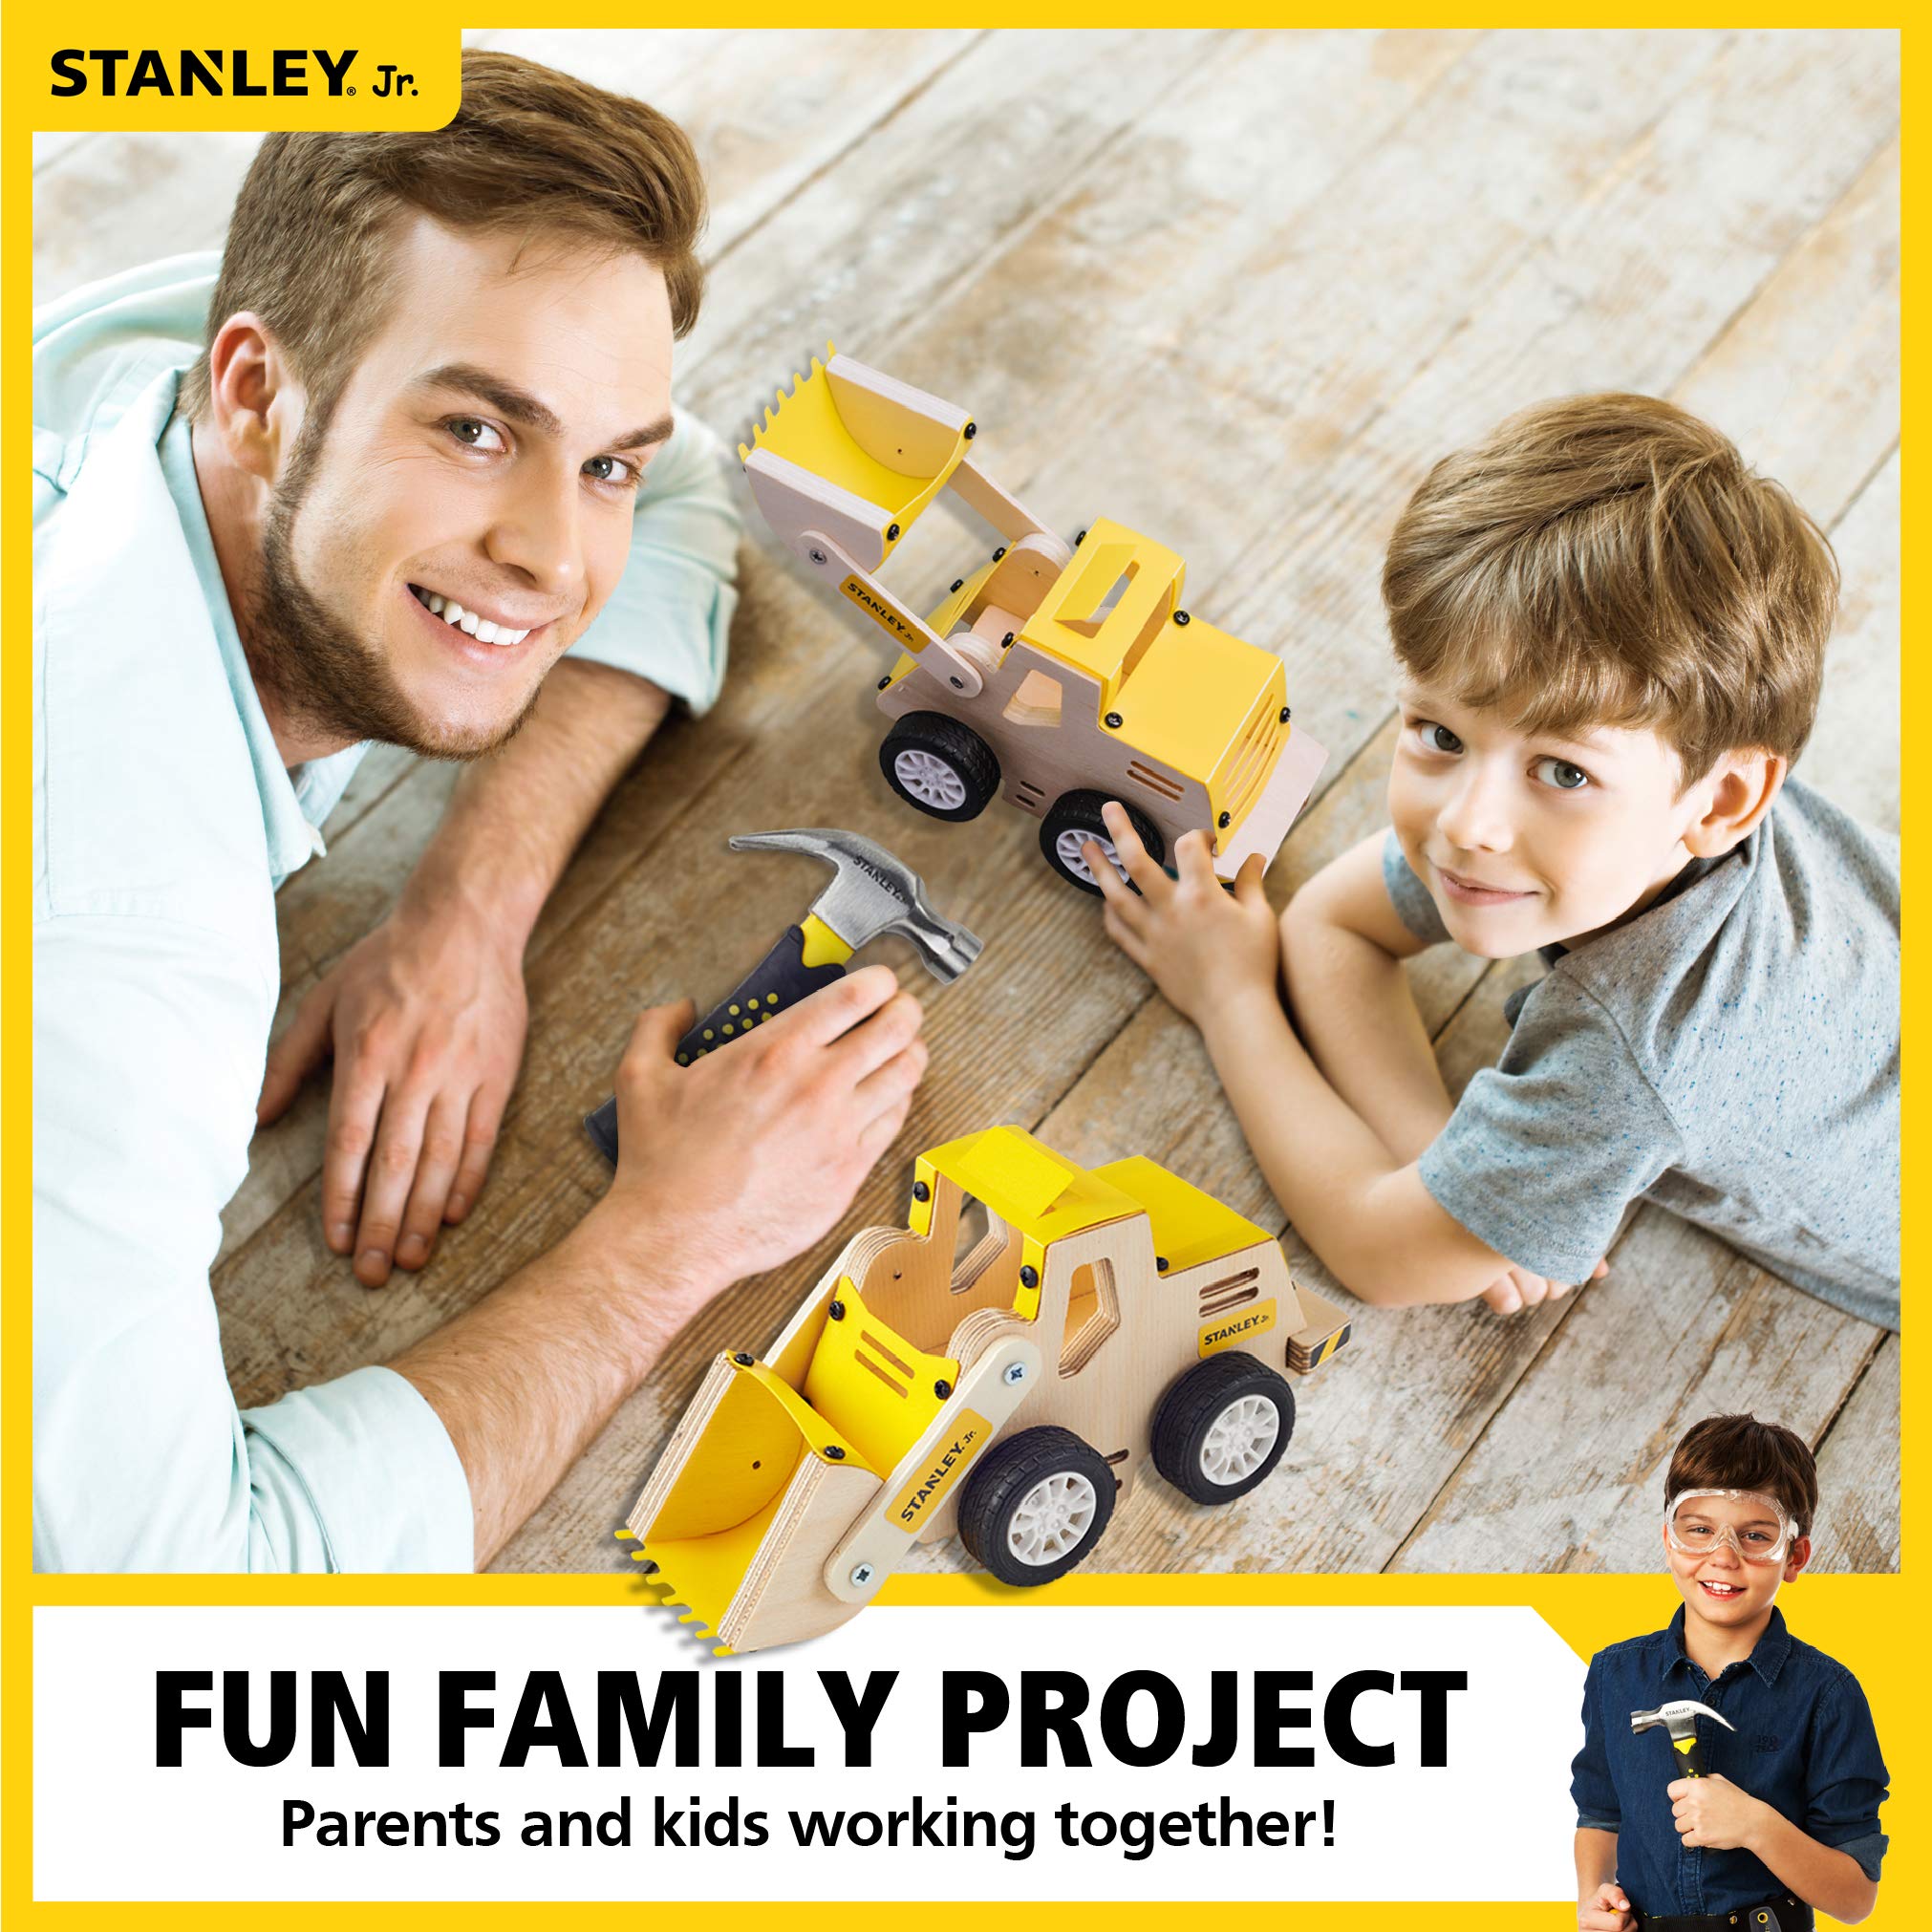 Stanley Jr. Construction Toy Truck Front Loader Wood Craft Kit - DIY Assemble Toy for Kids